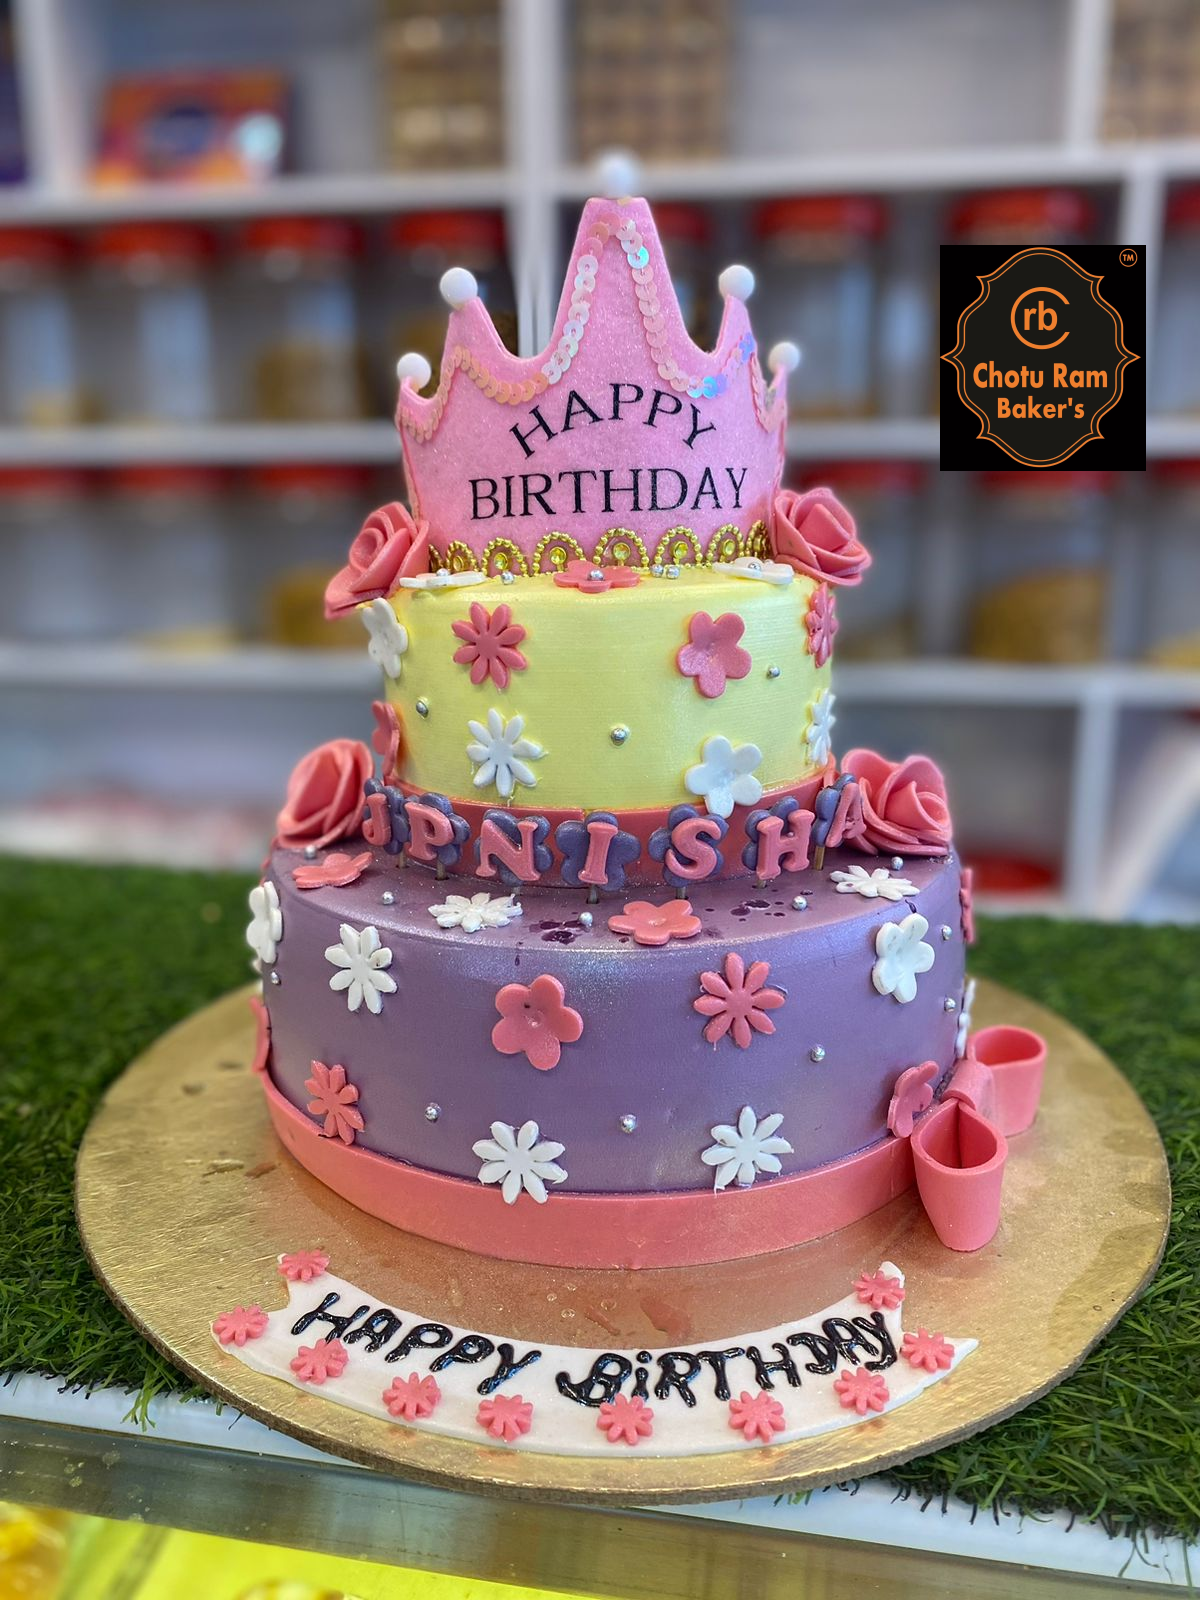 ❤️ Happy Birthday Cake For Chotu